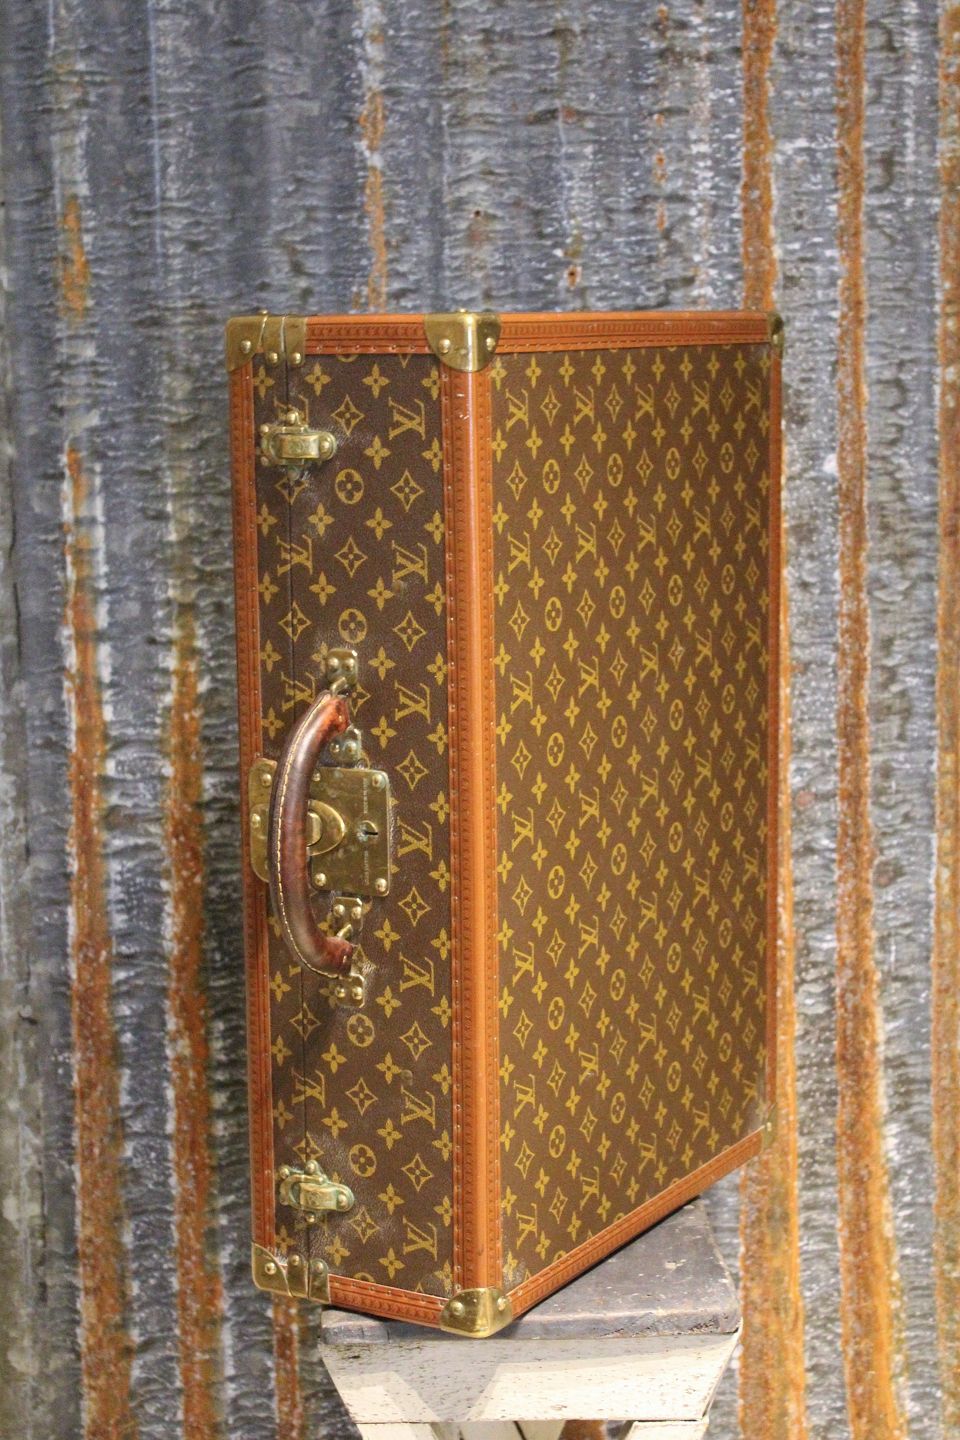 WorldAntique.net - Old vintage Louis suitcase (hardbox) with logo.